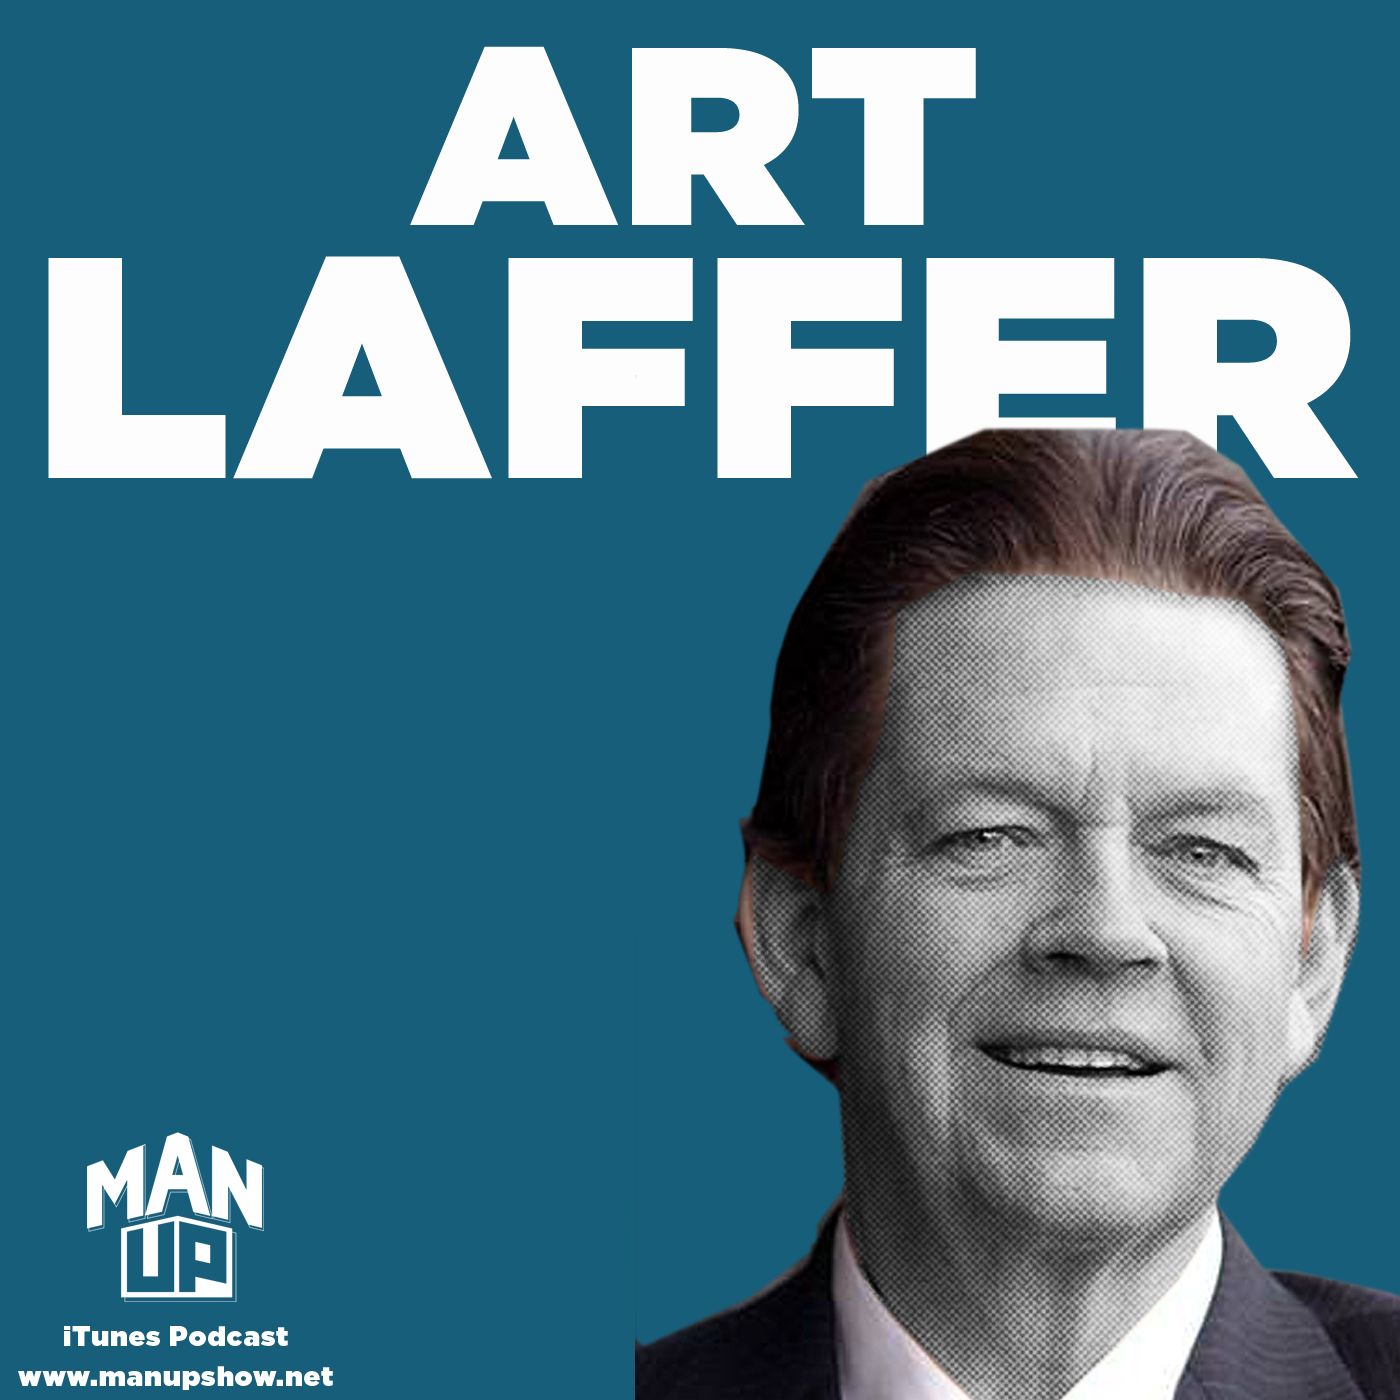 Art Laffer: the surprisingly funny, legendary Reagan economist schools the guys on economics